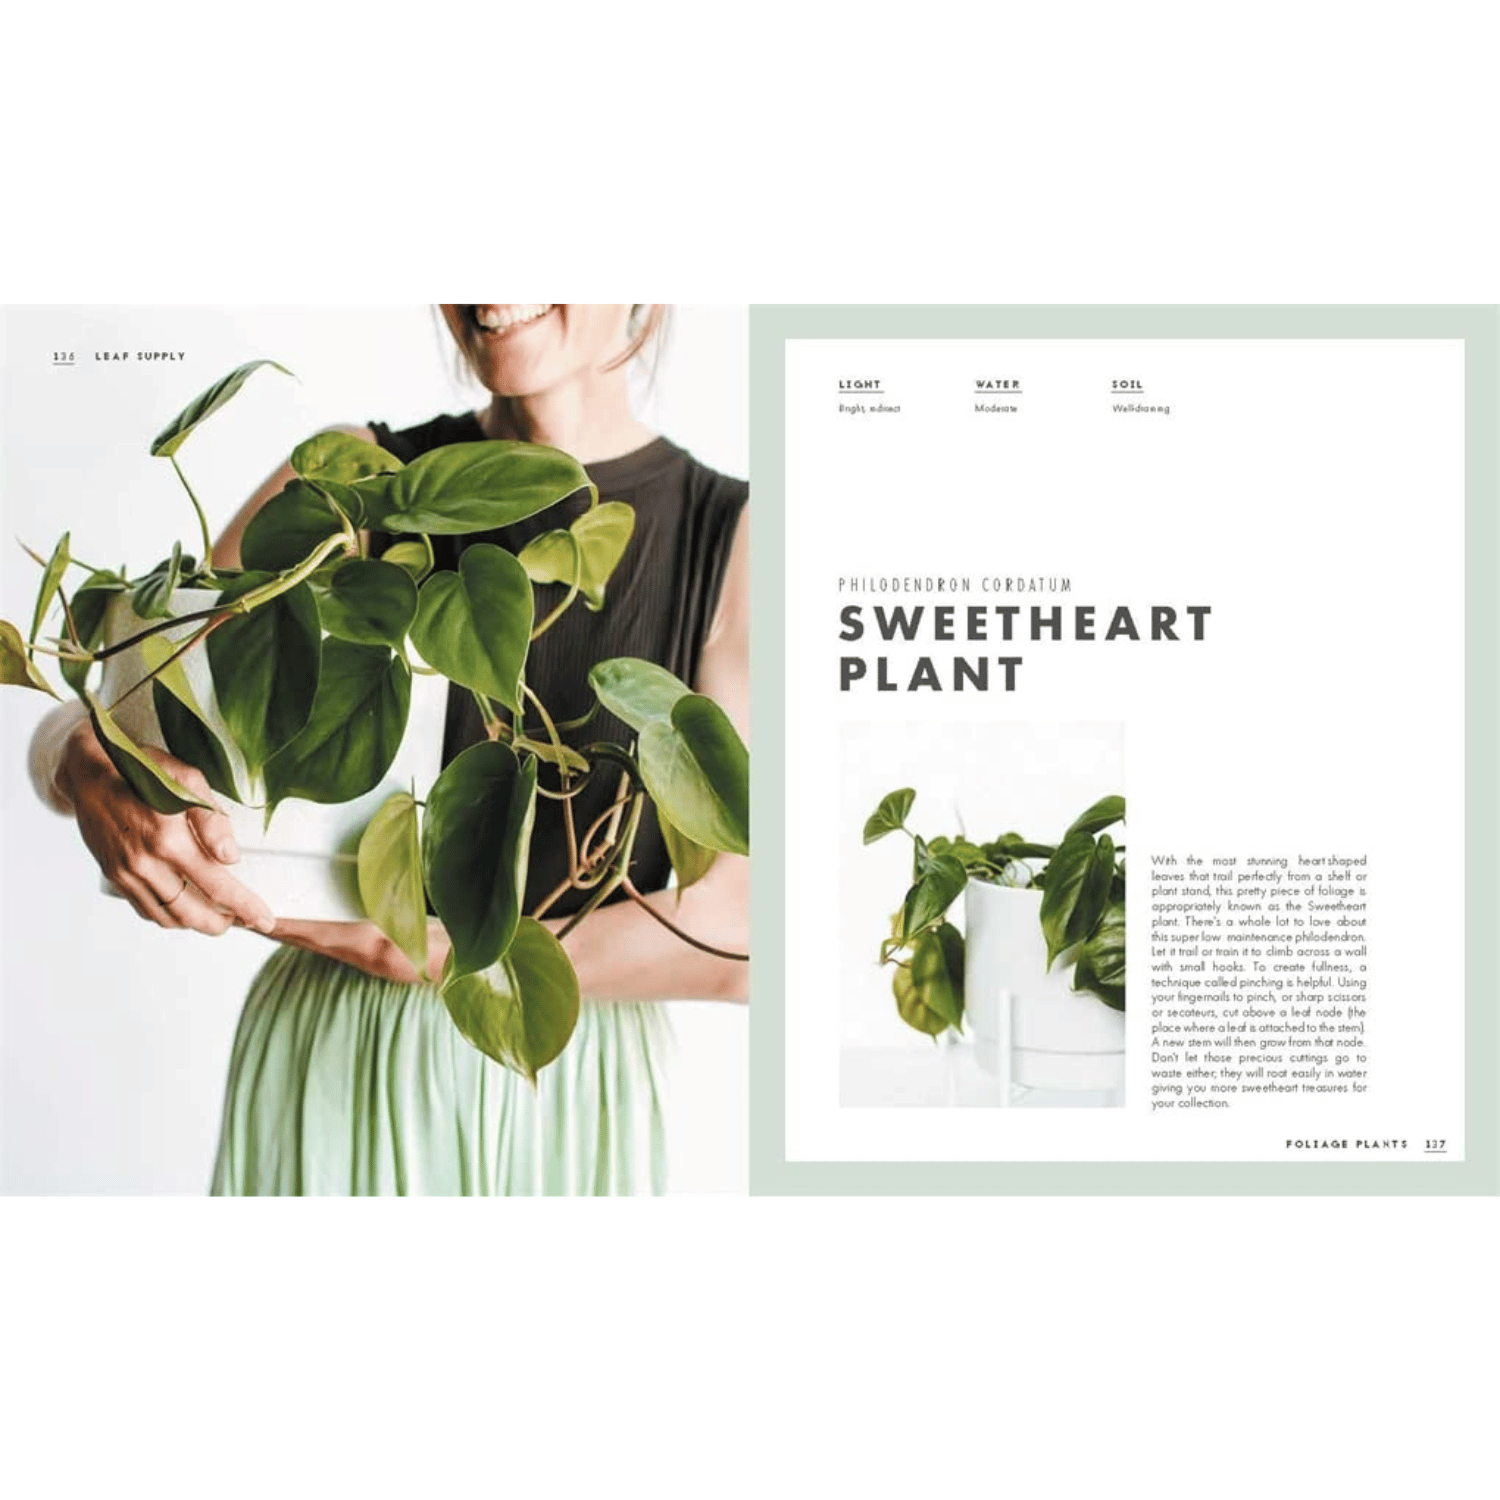 Leaf Supply Sweetheart Plant